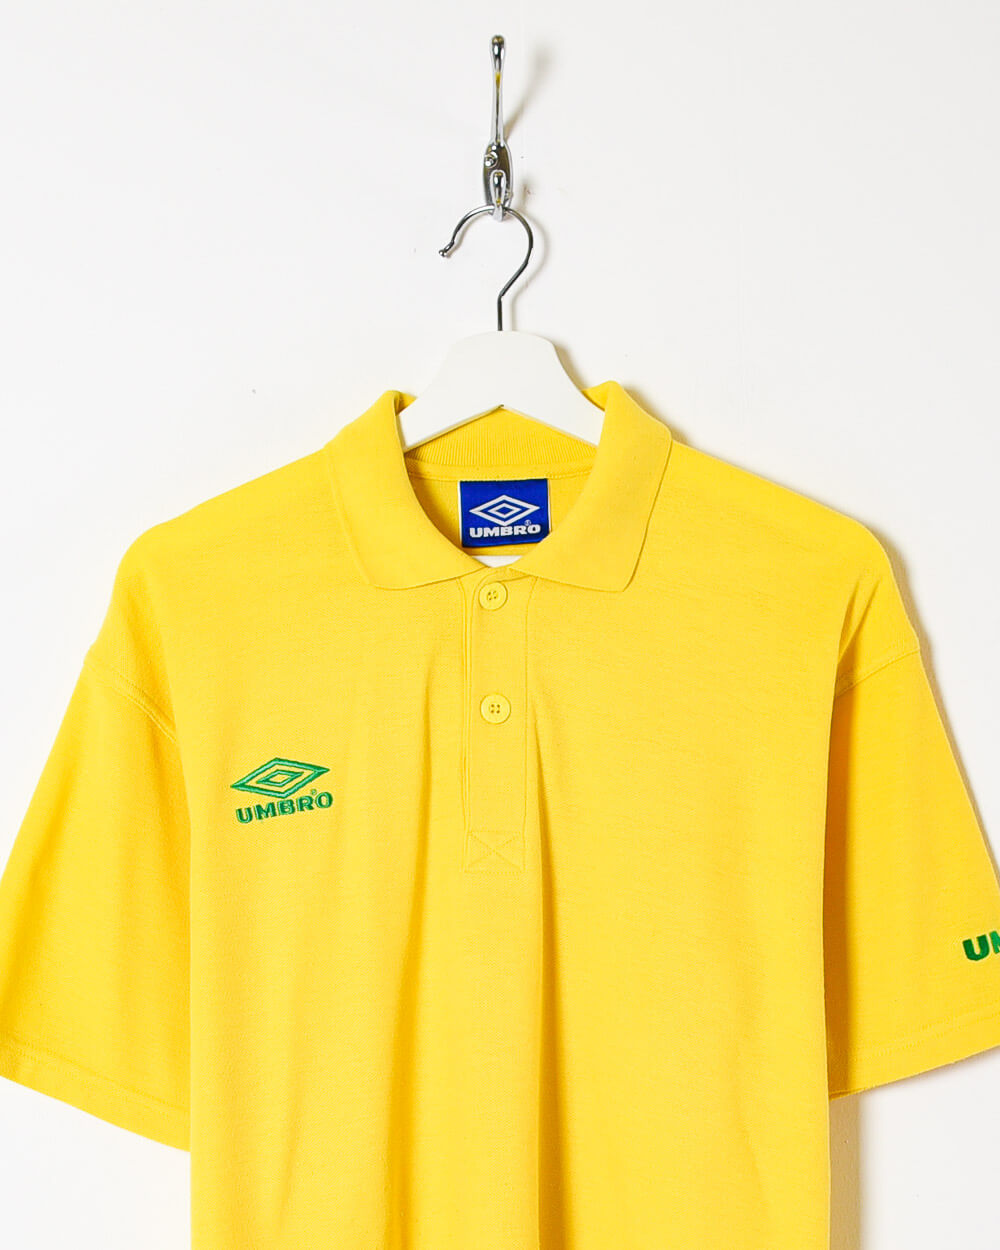 Yellow Umbro Polo Shirt - Medium